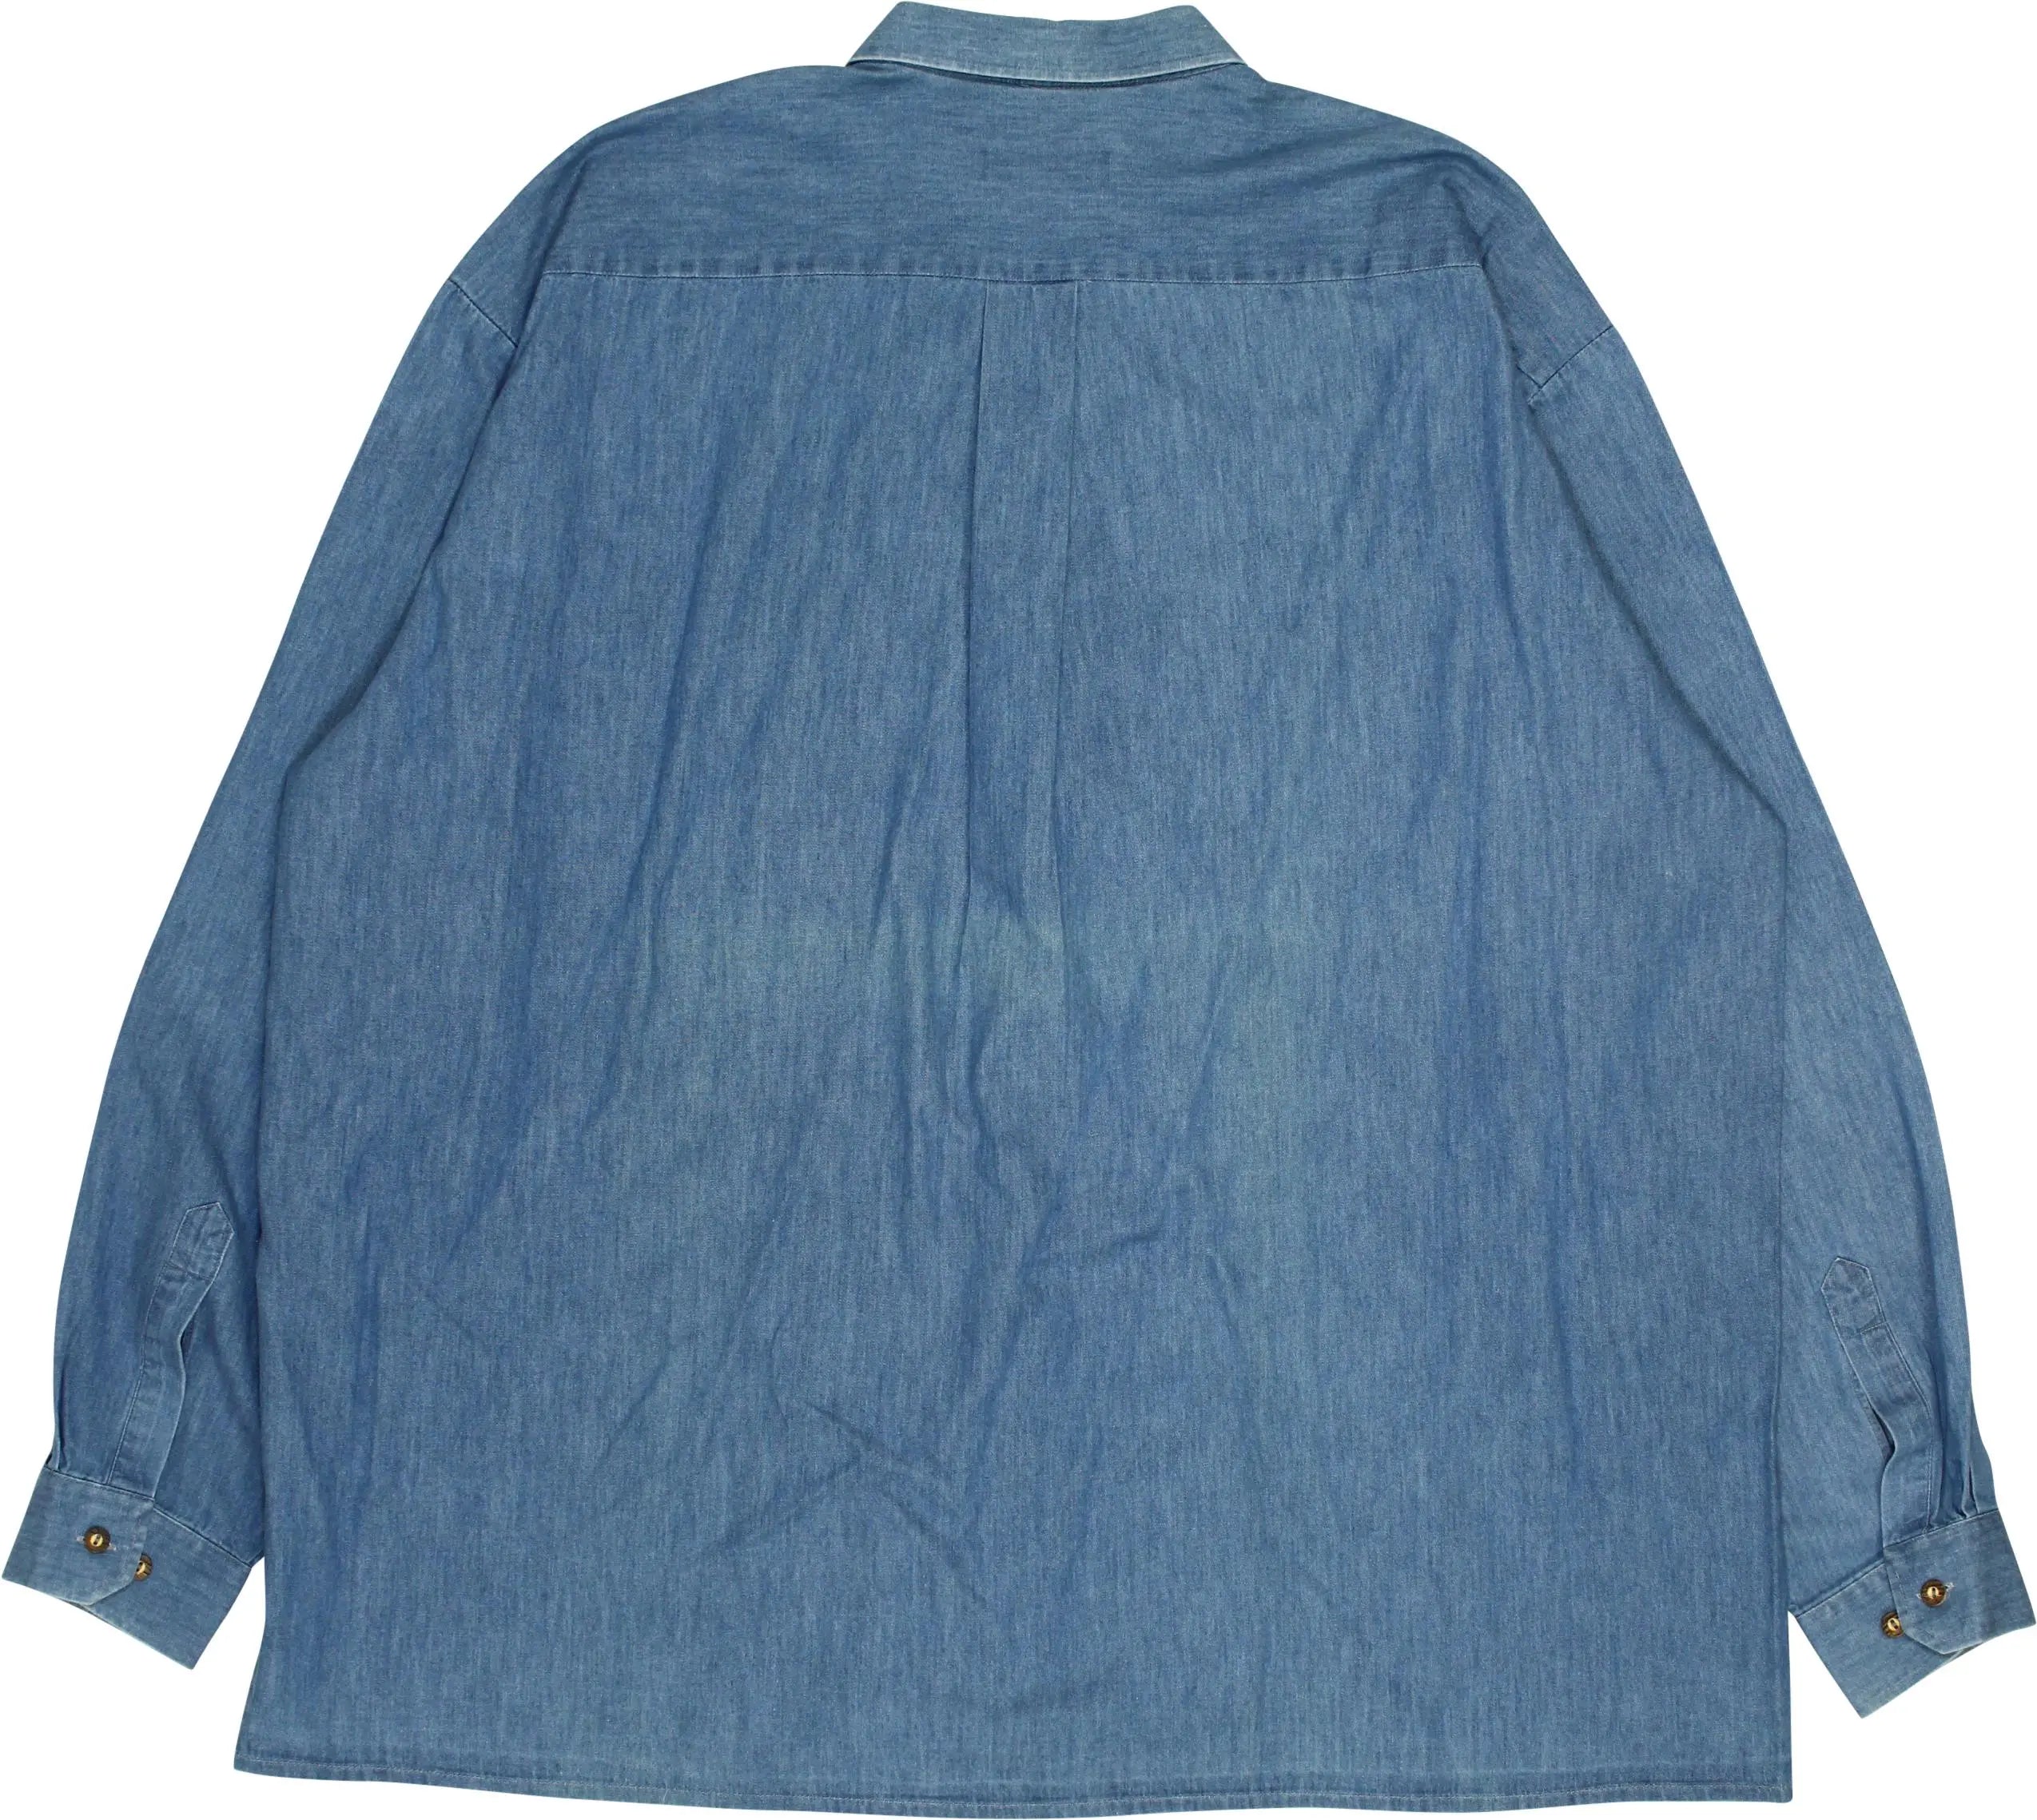 Gratz - Denim Shirt- ThriftTale.com - Vintage and second handclothing